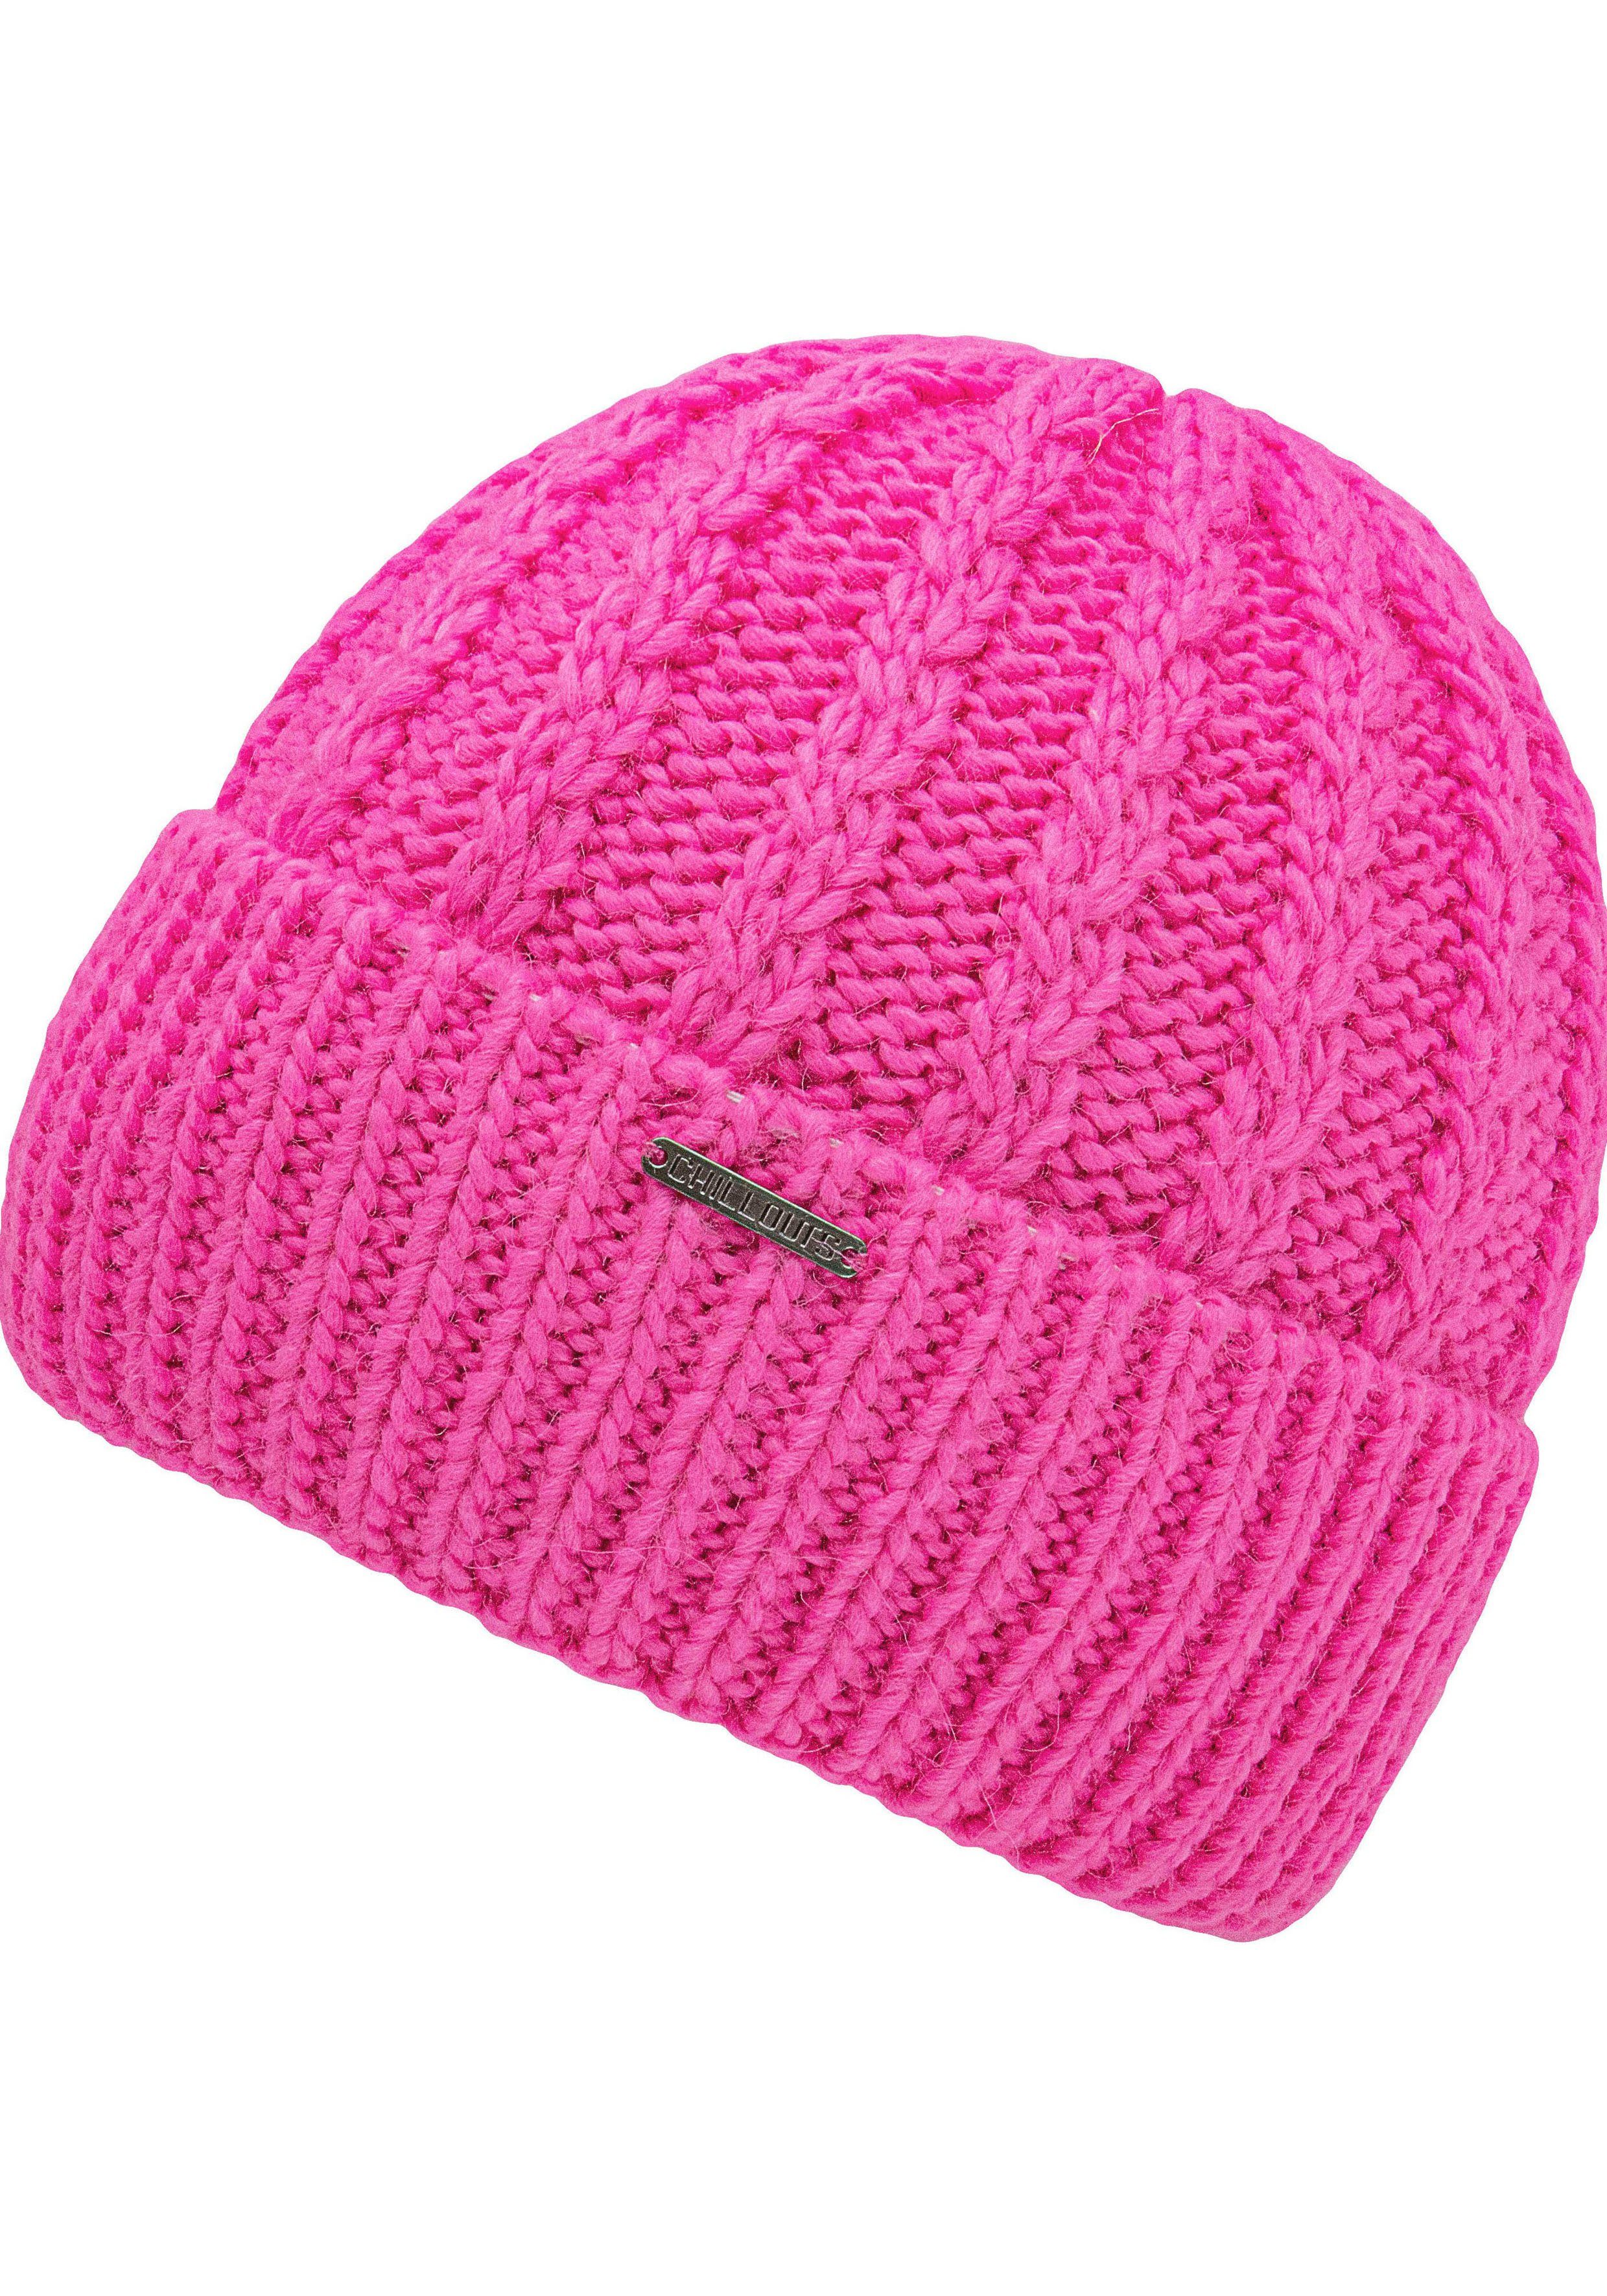 chillouts Strickmütze Nayla Hat Mit Zopfmuster pink